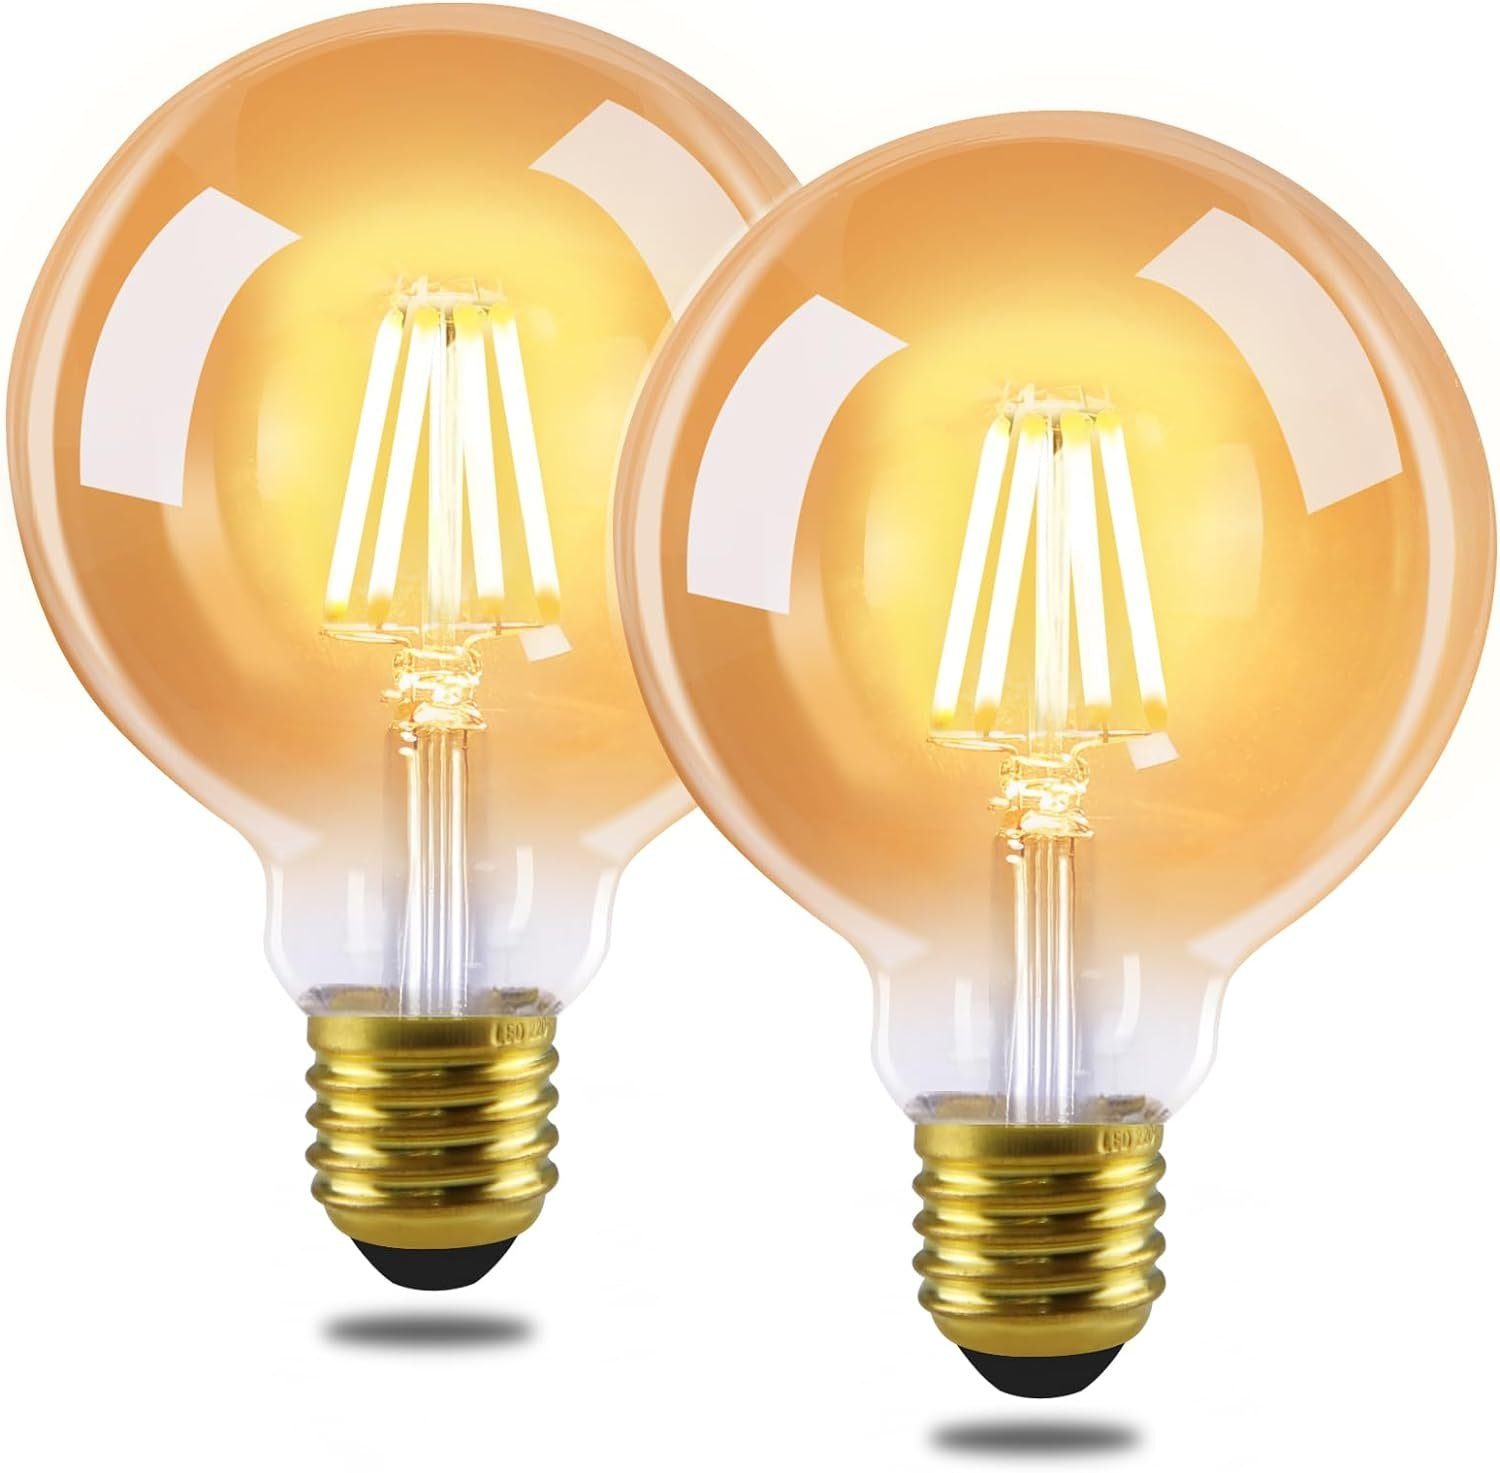 Nettlife LED-Leuchtmittel 2 Stück LED Glühbirne E27 Vintage LampeG95 Warmweiss Filament, E27, 2 St., Warmweiß, für Haus Hotel Café Bar